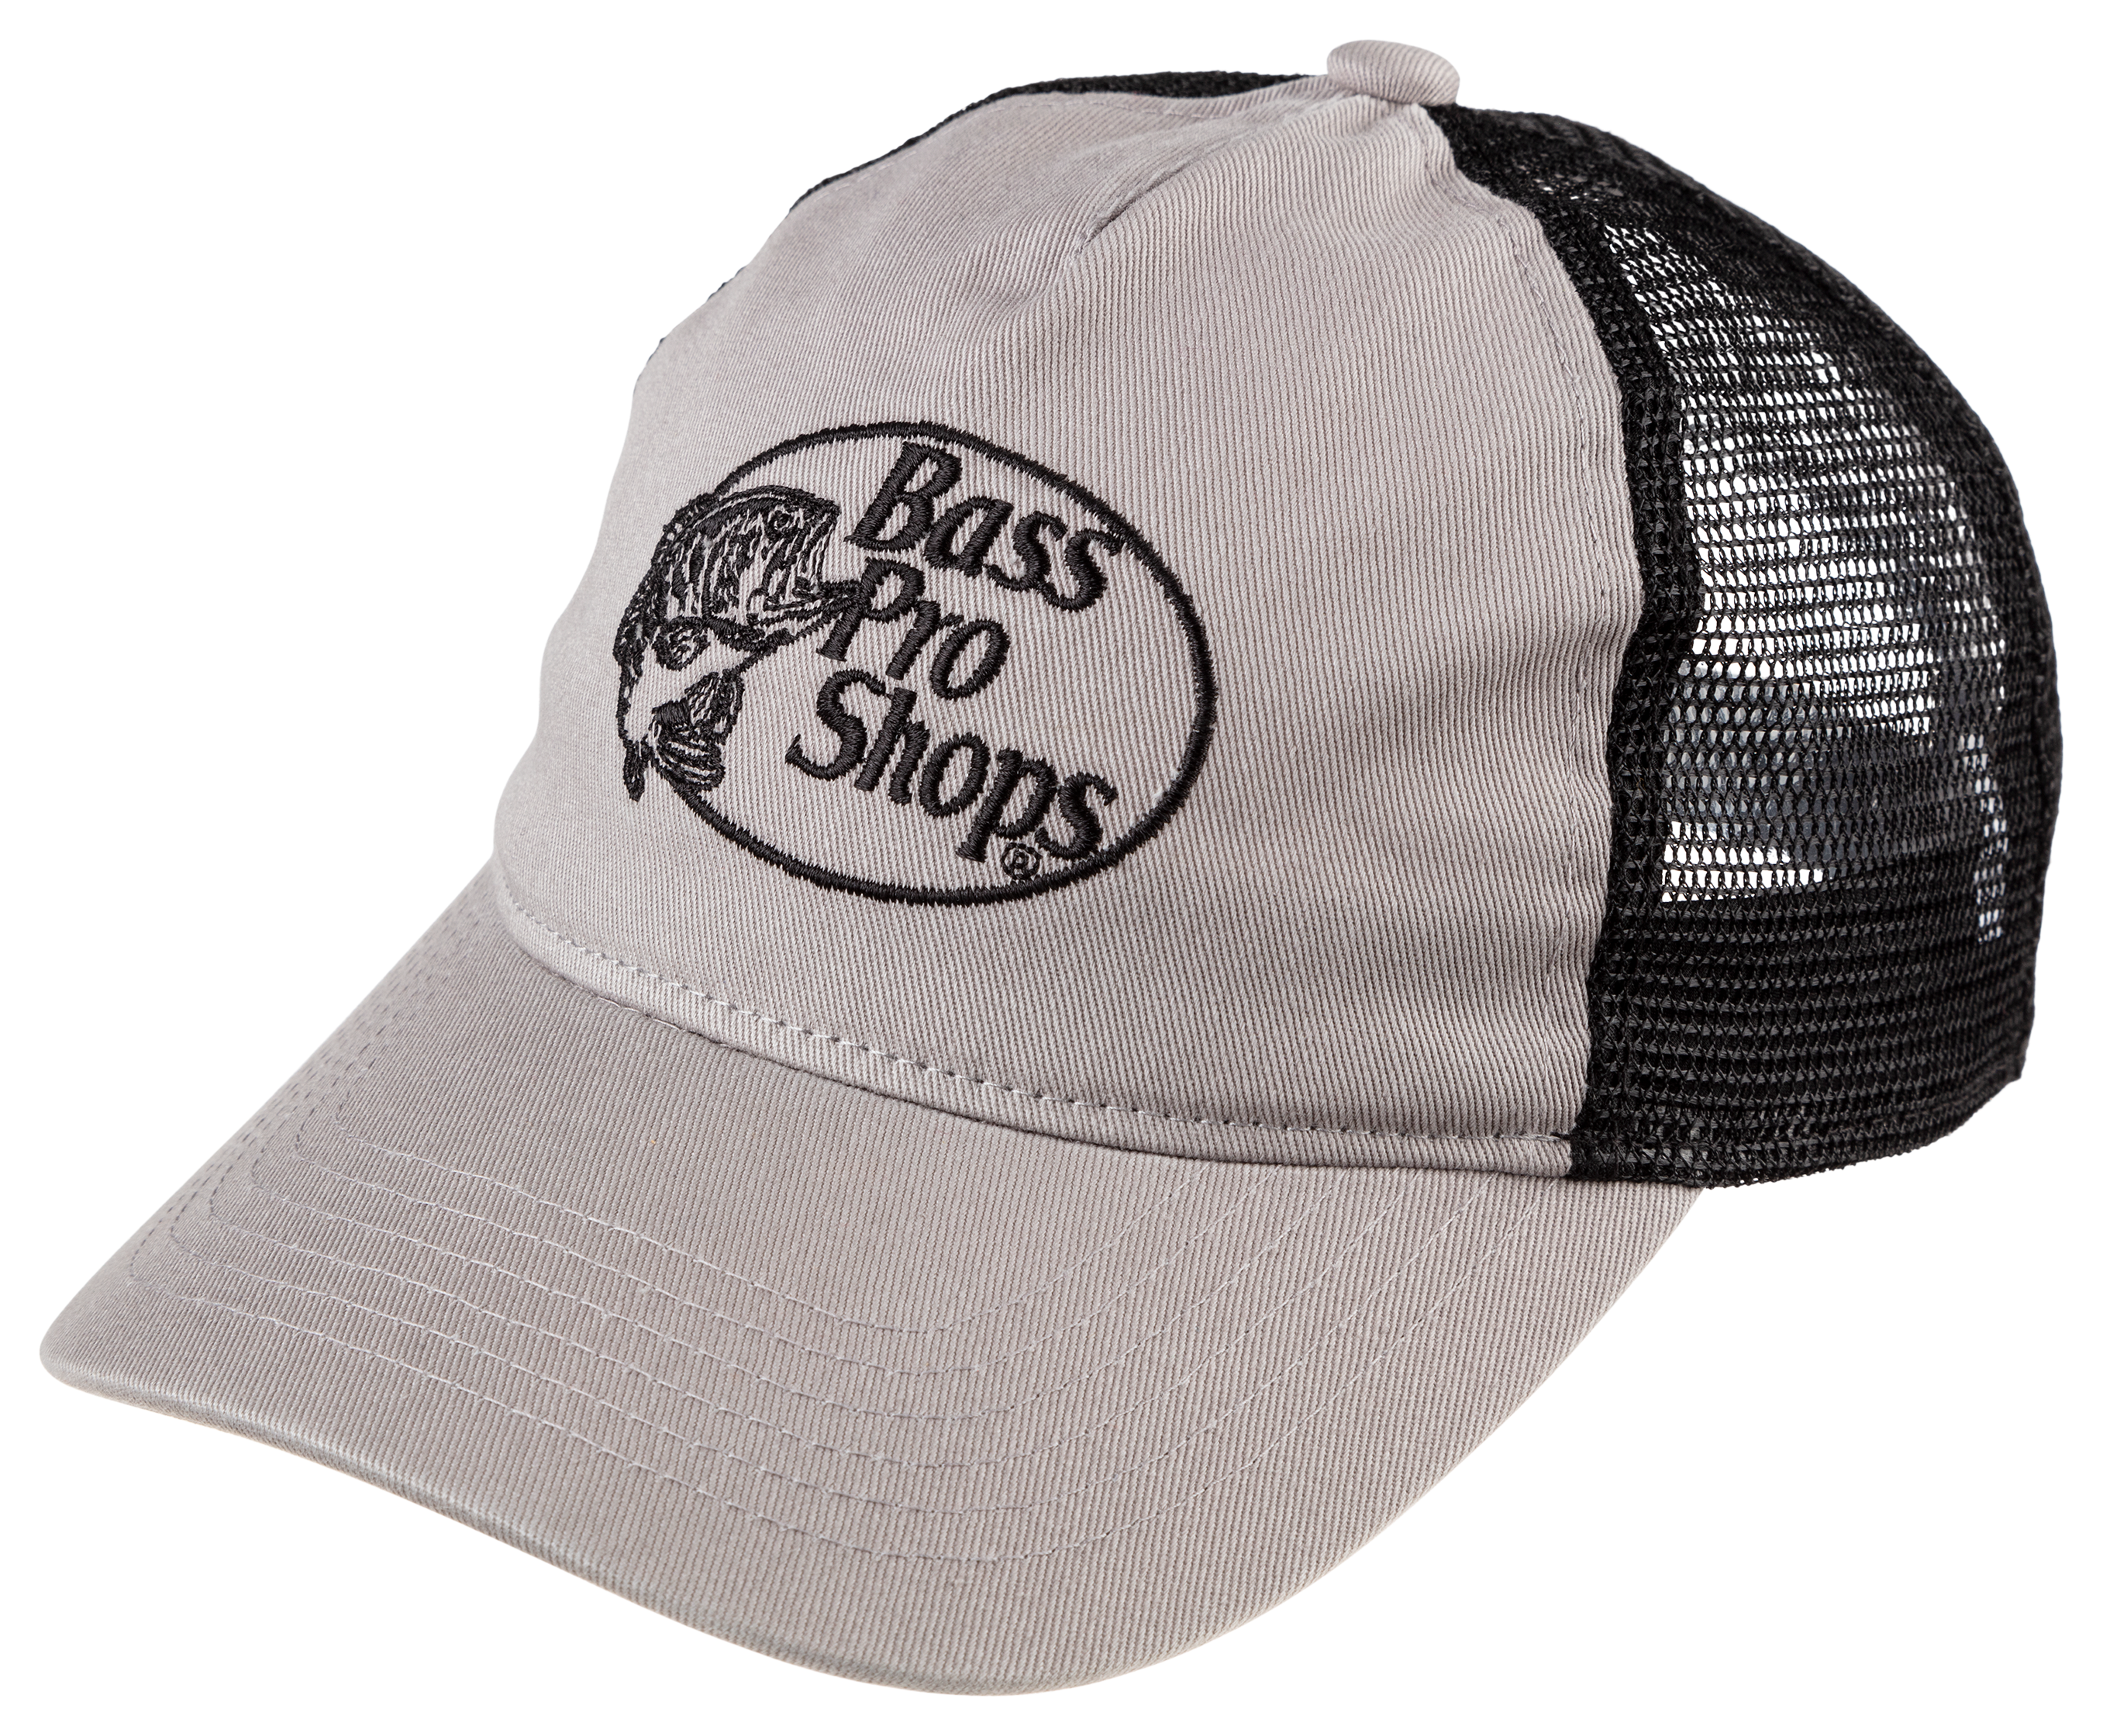 Stream Bass Pro Shops Hat Logo Mesh Fishing Hunting Trucker Cap by Bass pro  shops hat